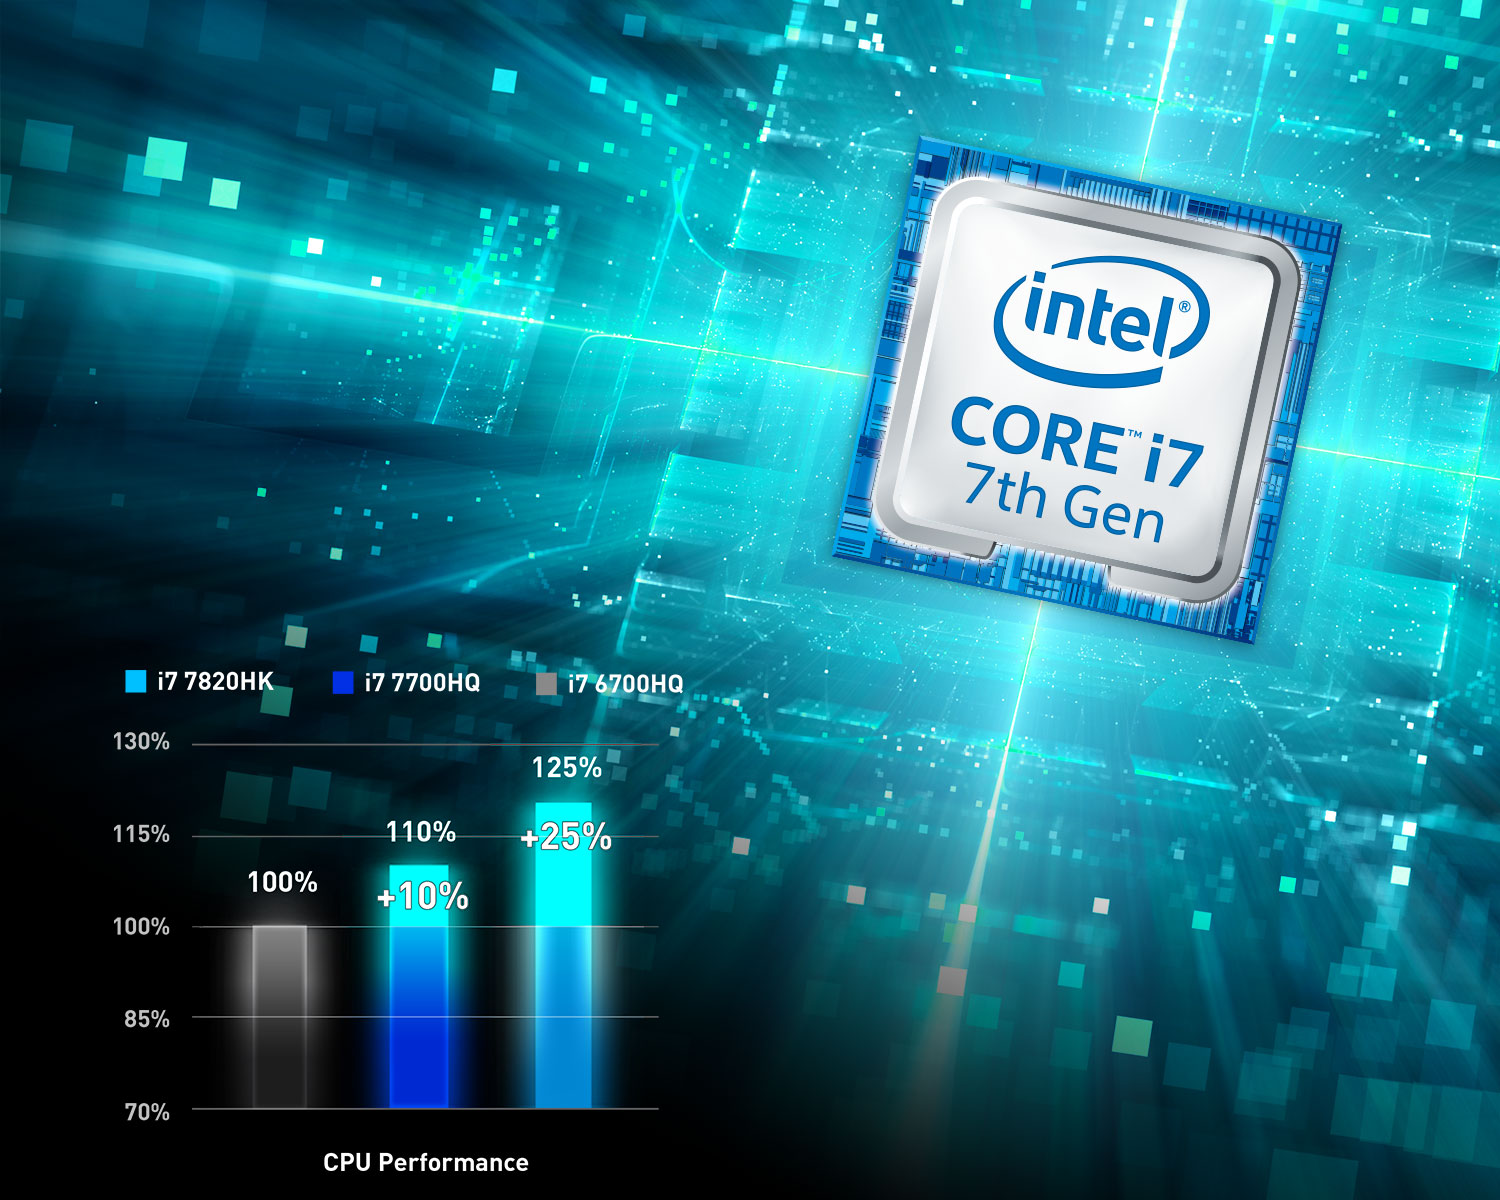 Интел кс. Процессор Intel Core i7. Intel Core i7 7 7th Gen. Intel Core i7 8th Gen. Intel Core i7-8750h.